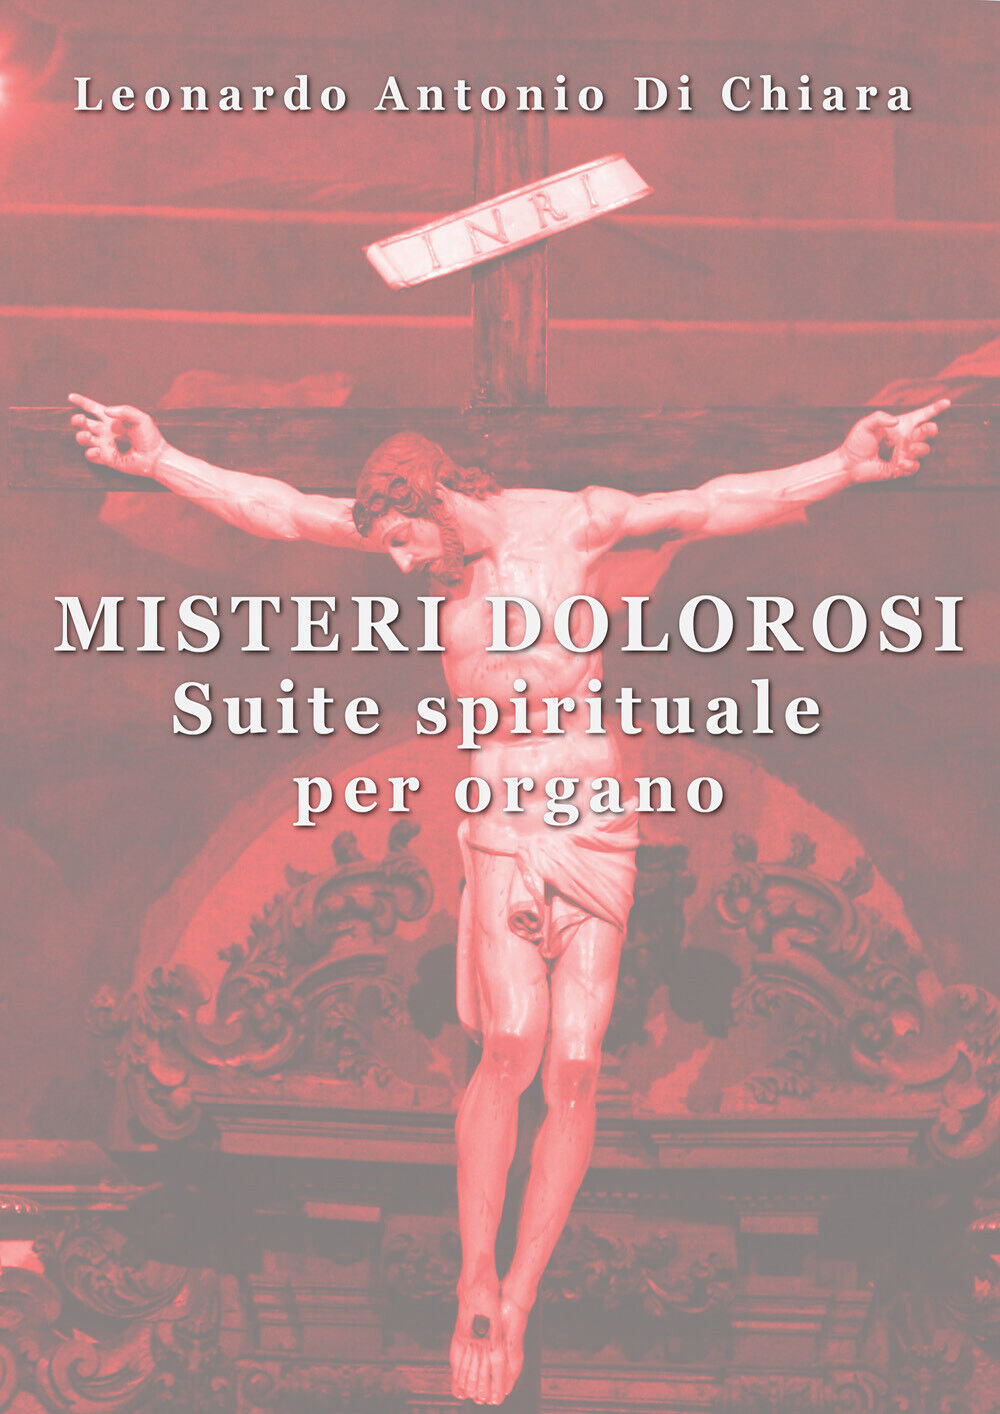 Misteri dolorosi Suite spirituale per organo di Leonardo Antonio Di Chiara,  202